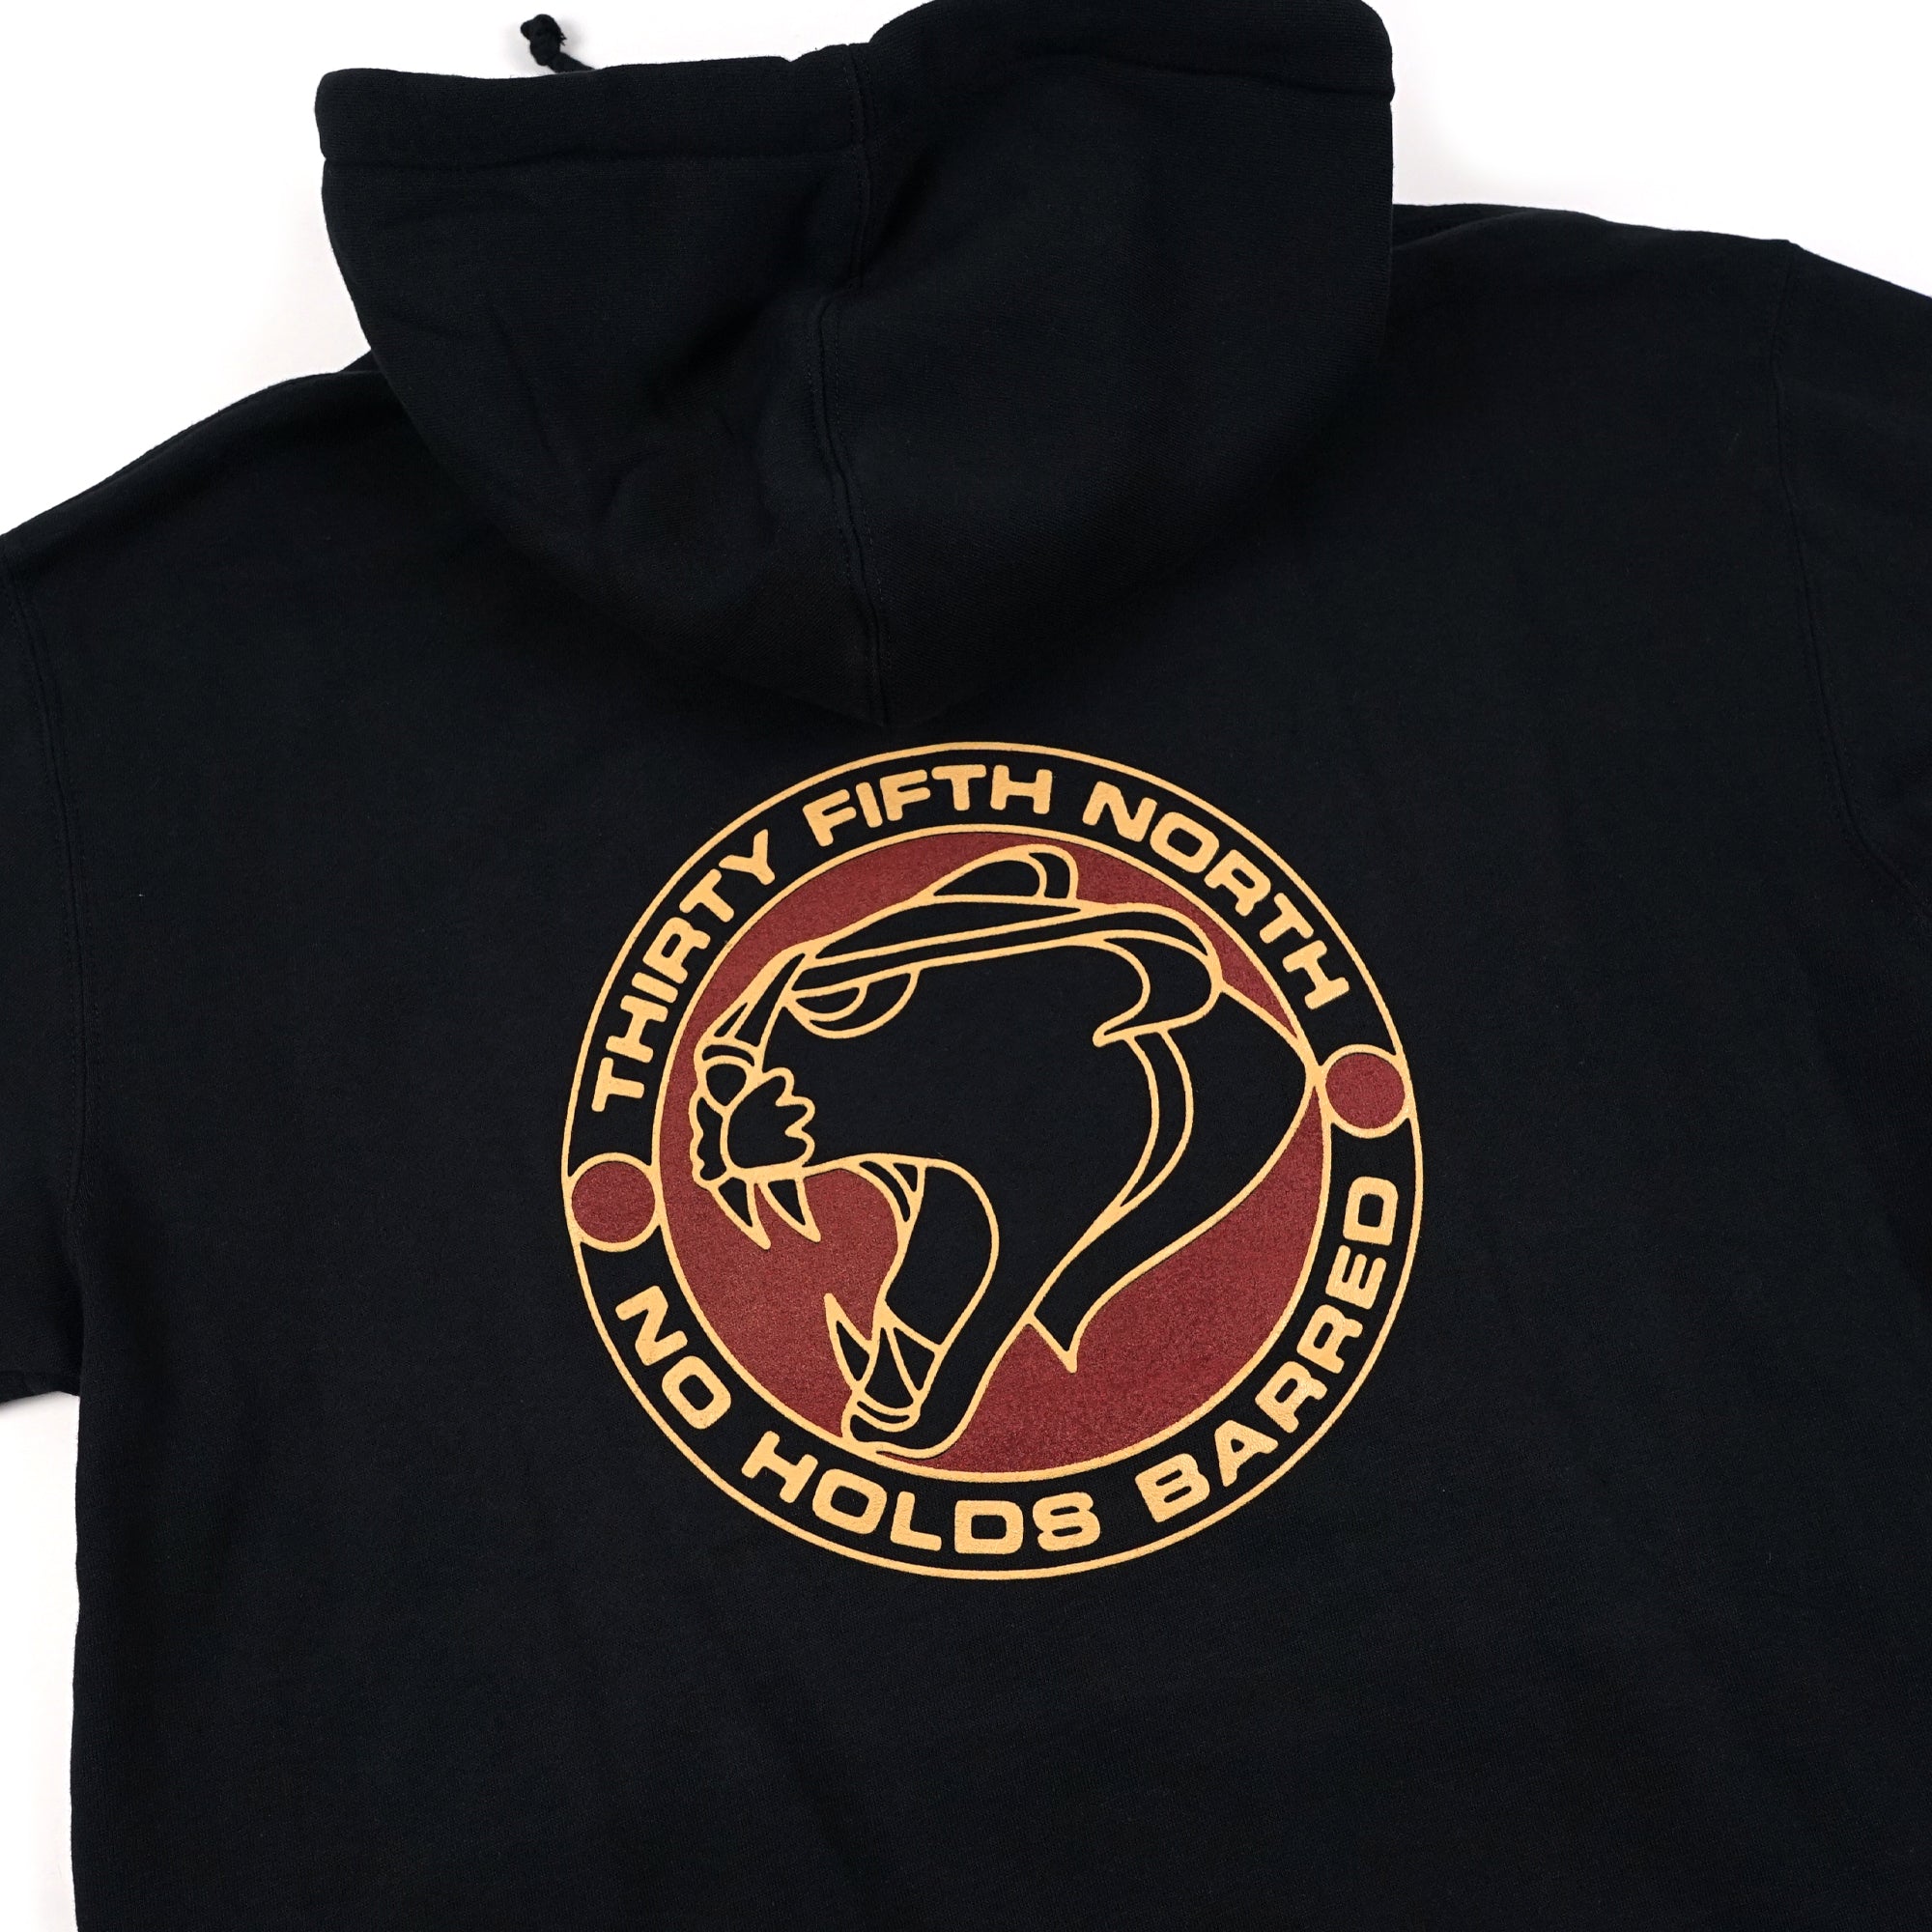 35th North ‘No Holds Barred’ Hooded Sweatshirt - Black